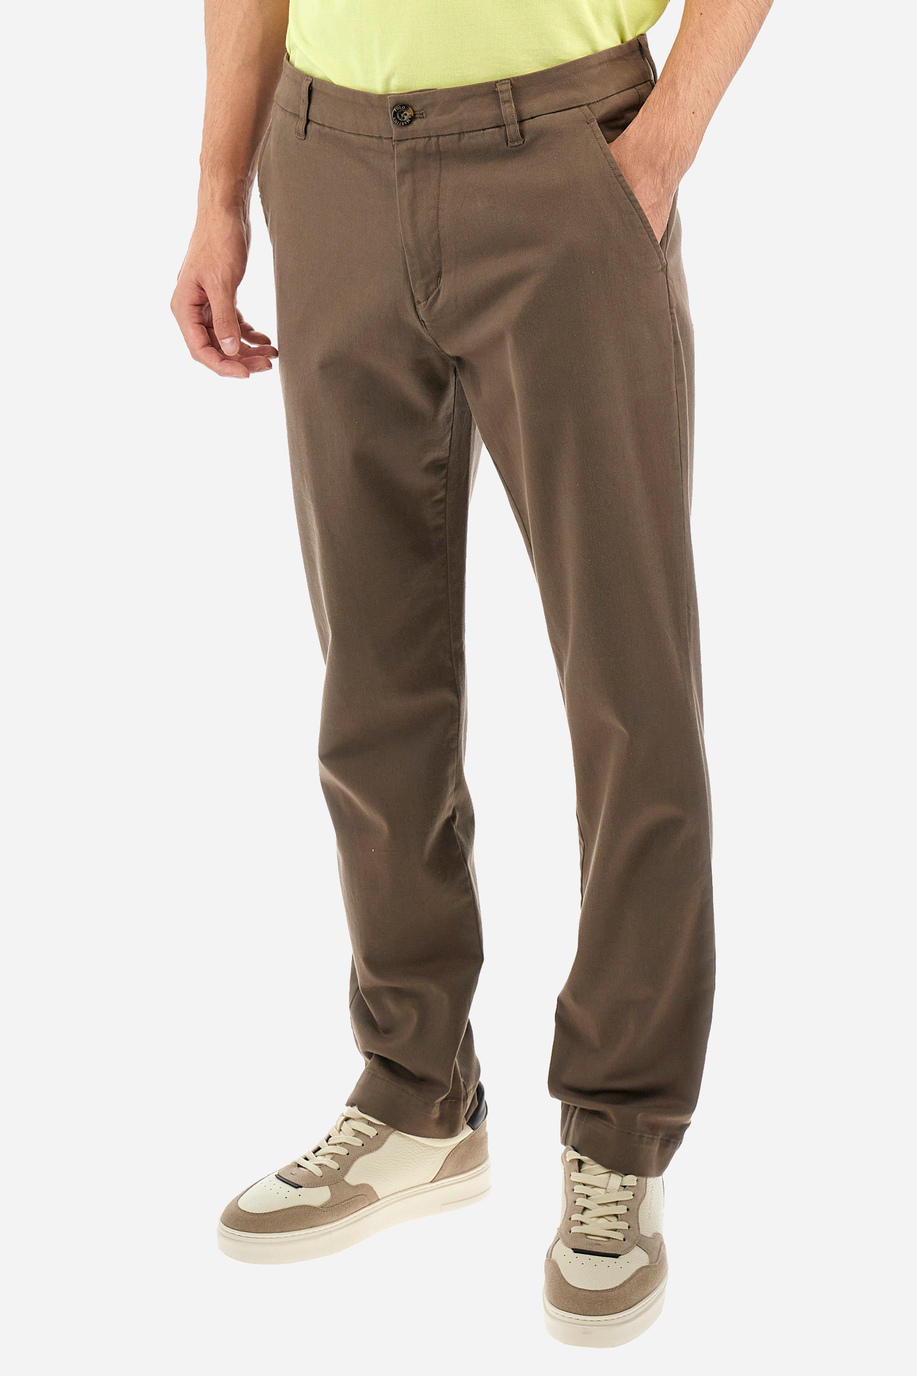 Pantalone chino da uomo regular fit - Yirmeyahu - Logos | La Martina - Official Online Shop